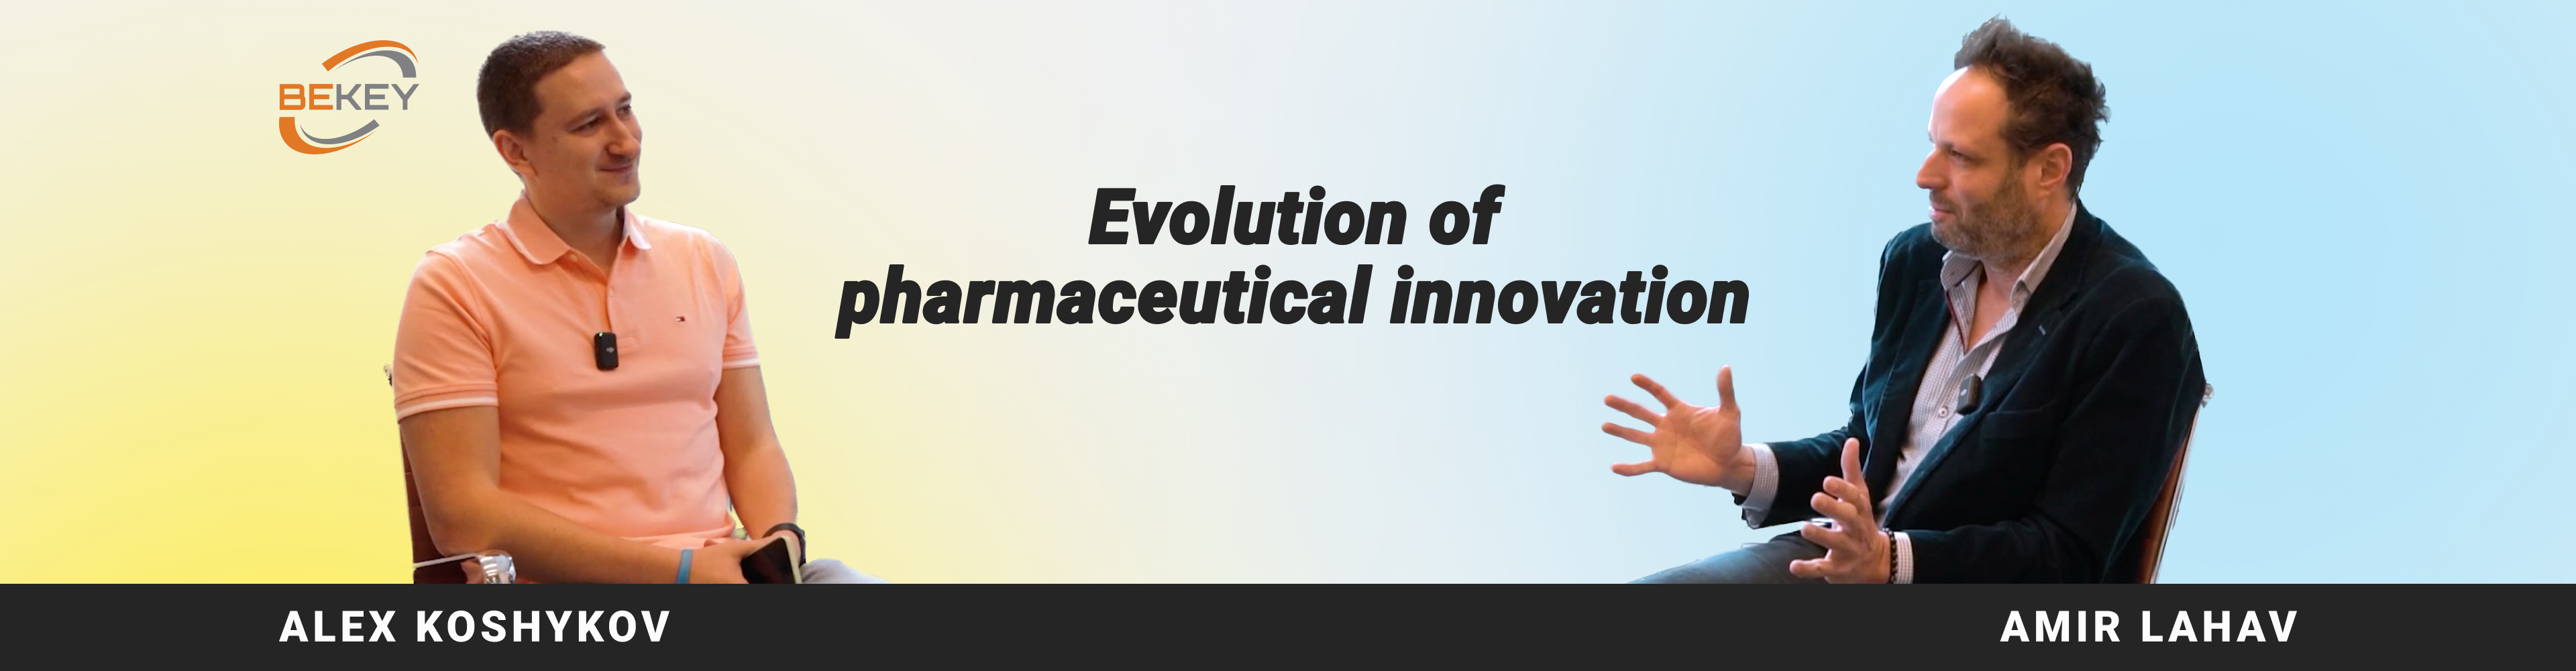 Evolution of Pharmaceutical Innovation. Digital Health Interviews: Amir Lahav - image